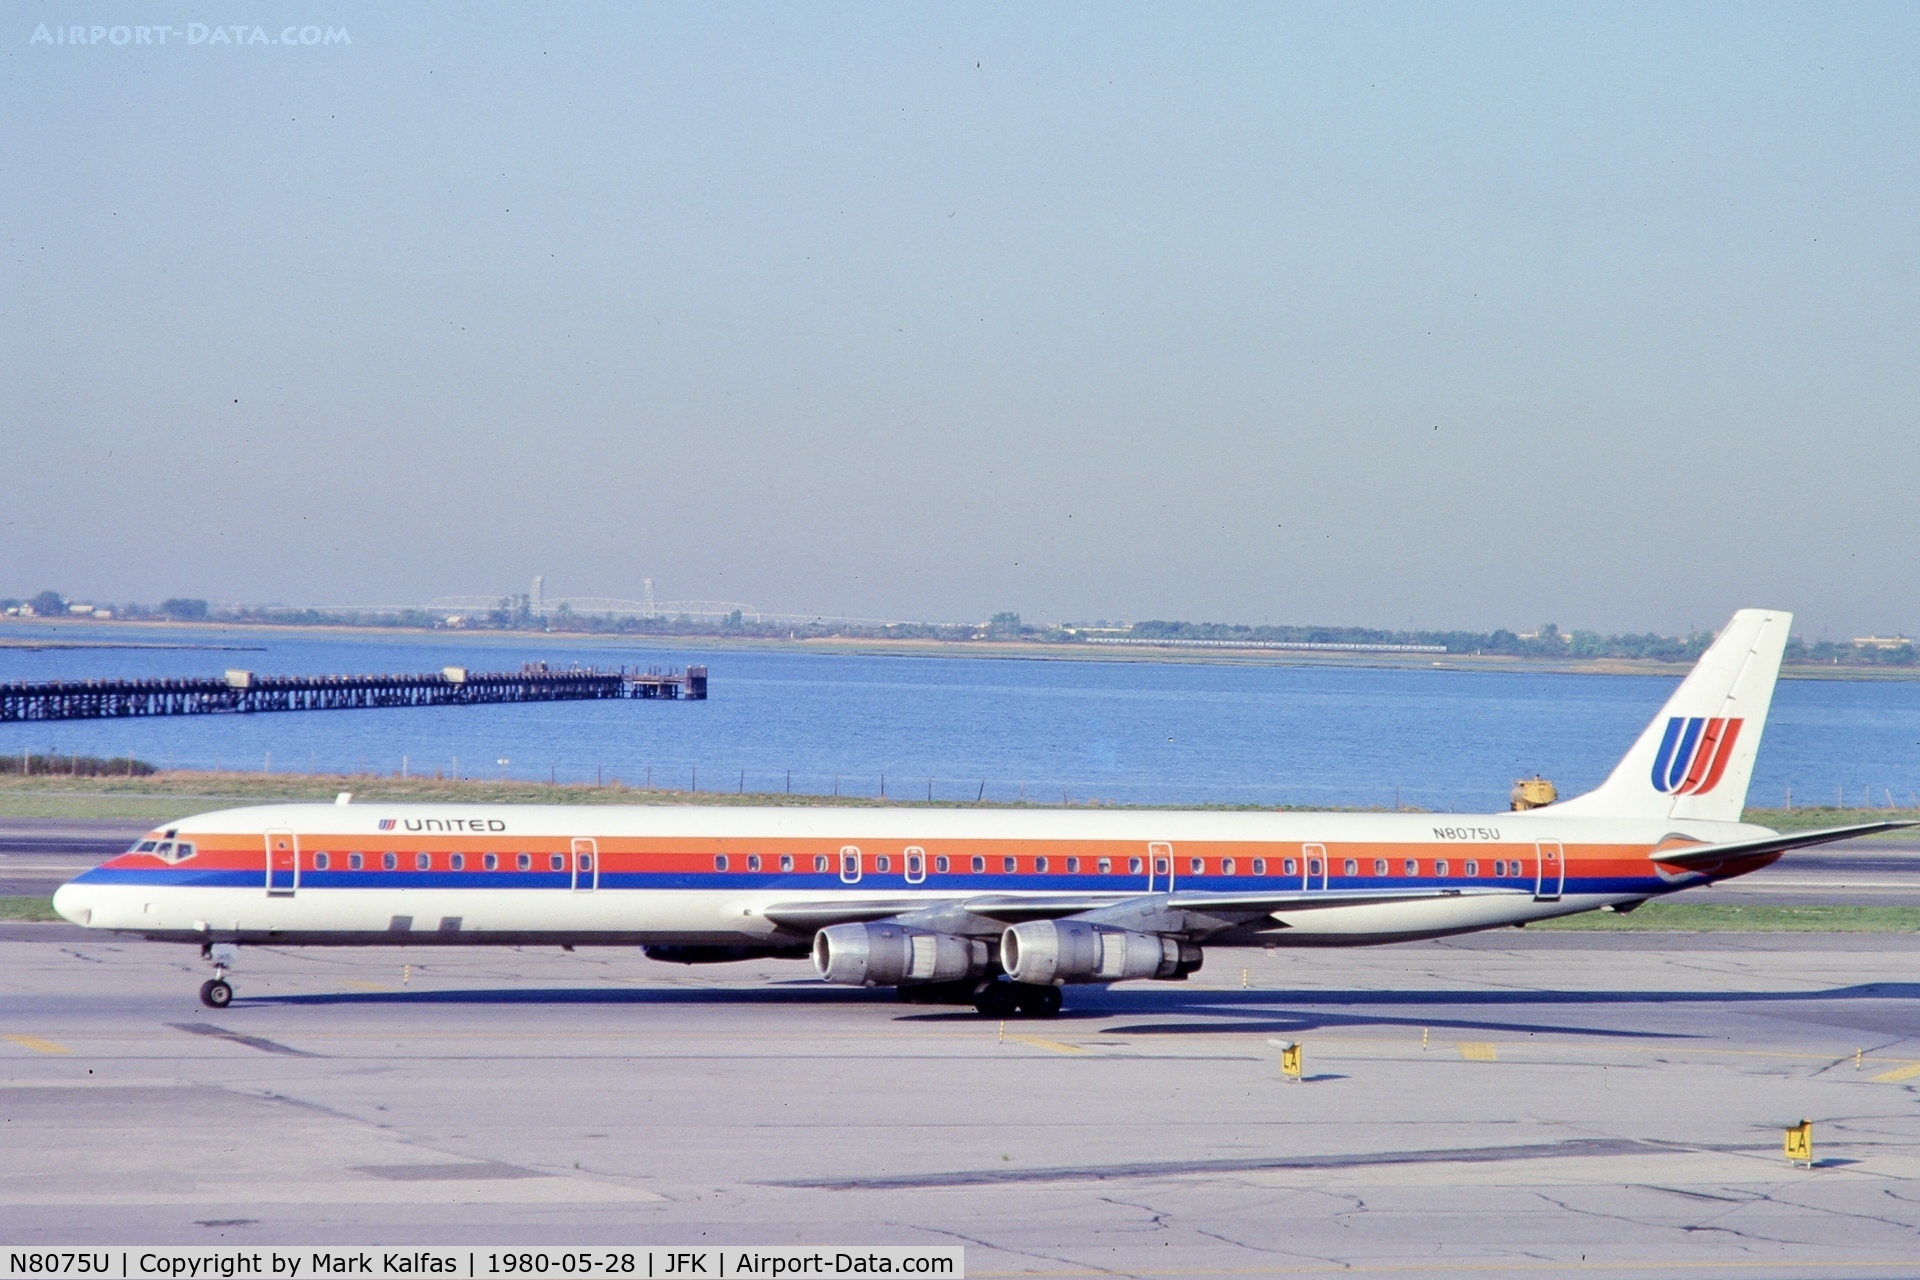 N8075U, 1967 Douglas DC-8-61 C/N 45940, United DC-8-61, at JFK 1980